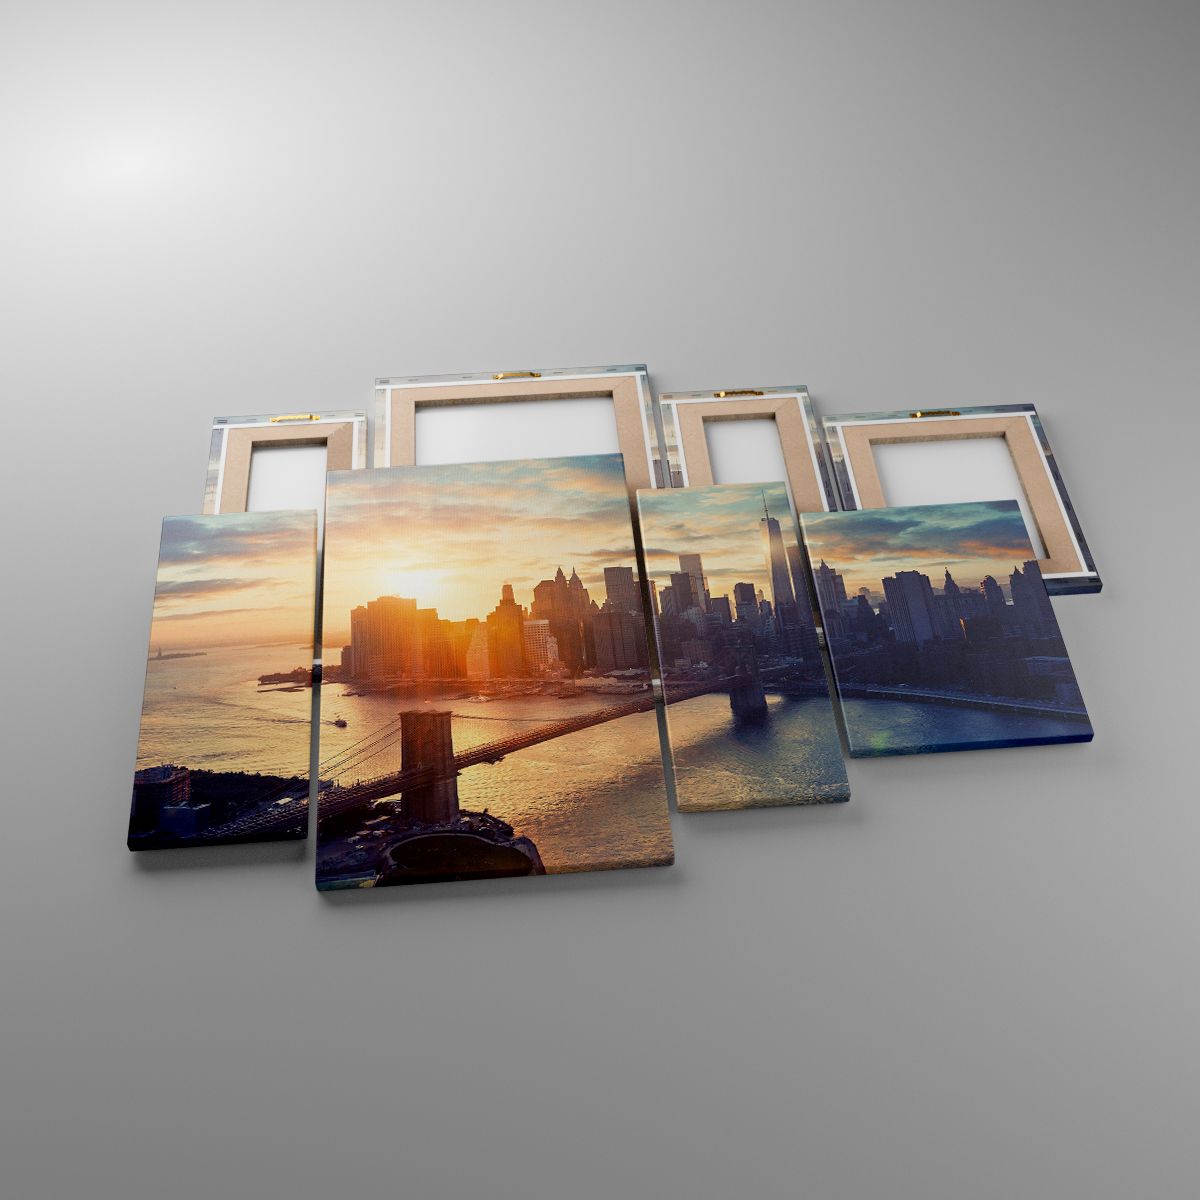 Leinwandbild New York, Leinwandbild Brooklyn Brücke, Leinwandbild Die Architektur, Leinwandbild Stadt, Leinwandbild Der Sonnenuntergang